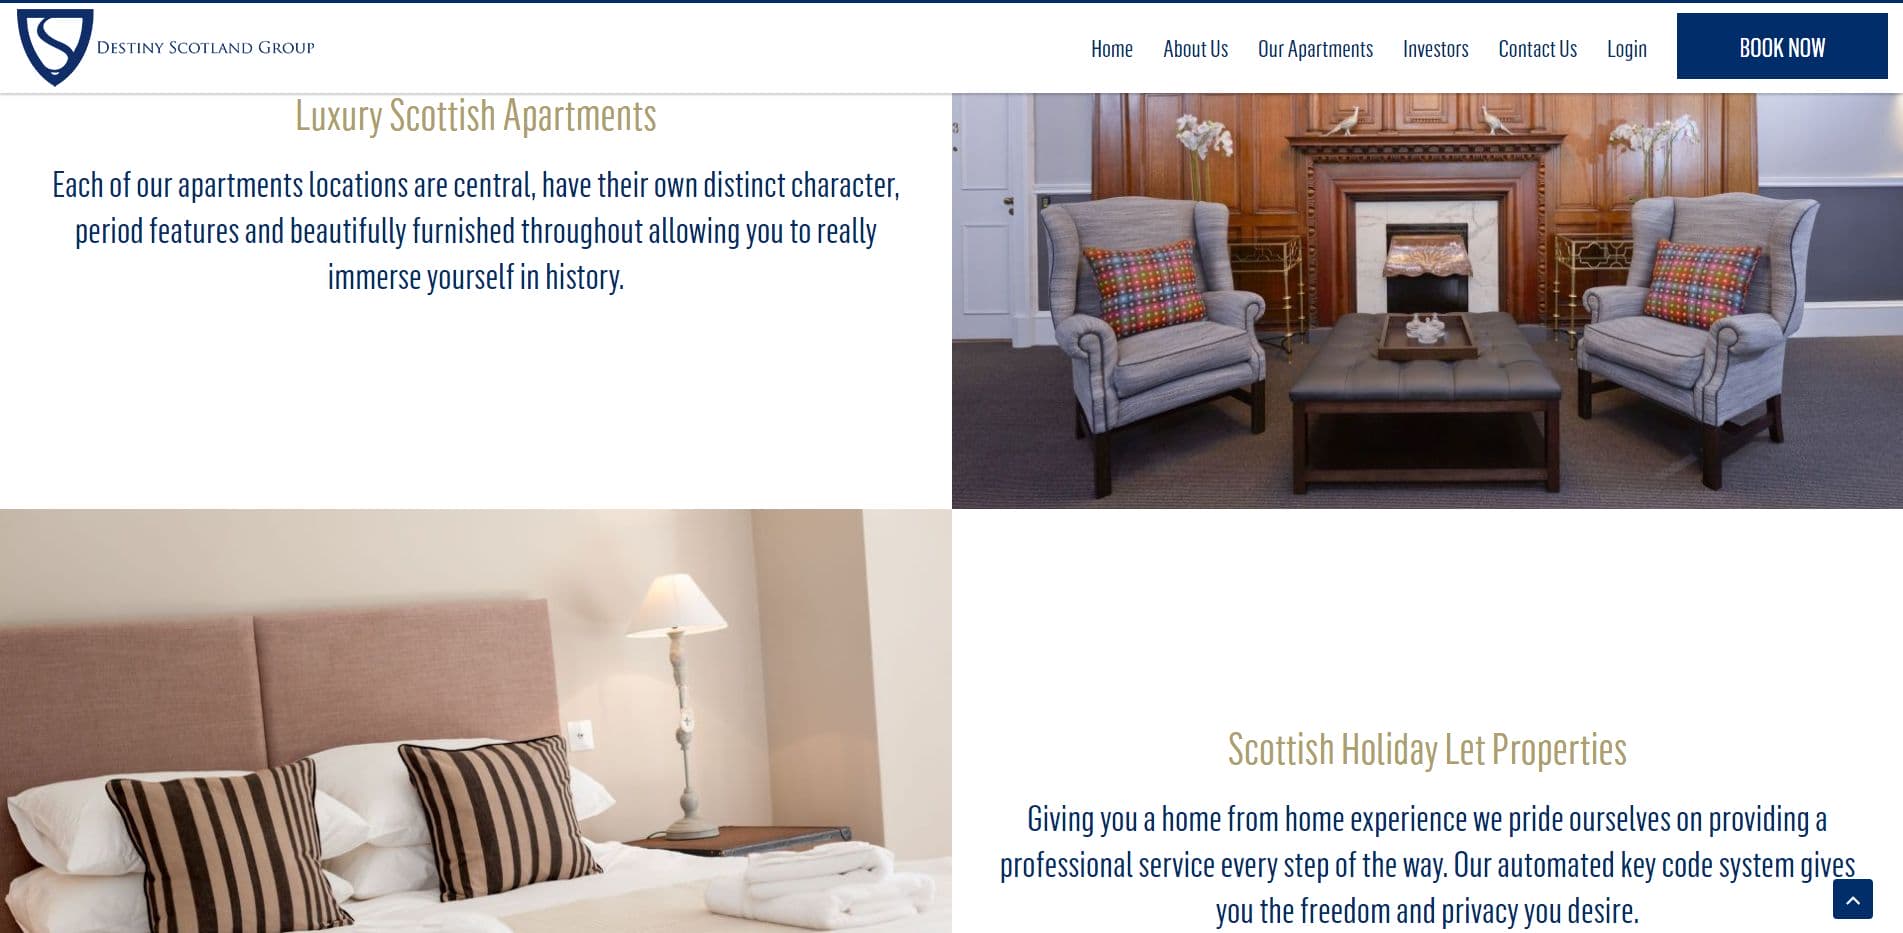 Destiny-Scotland-Luxury-Scottish-Apartments-to-Rent-1